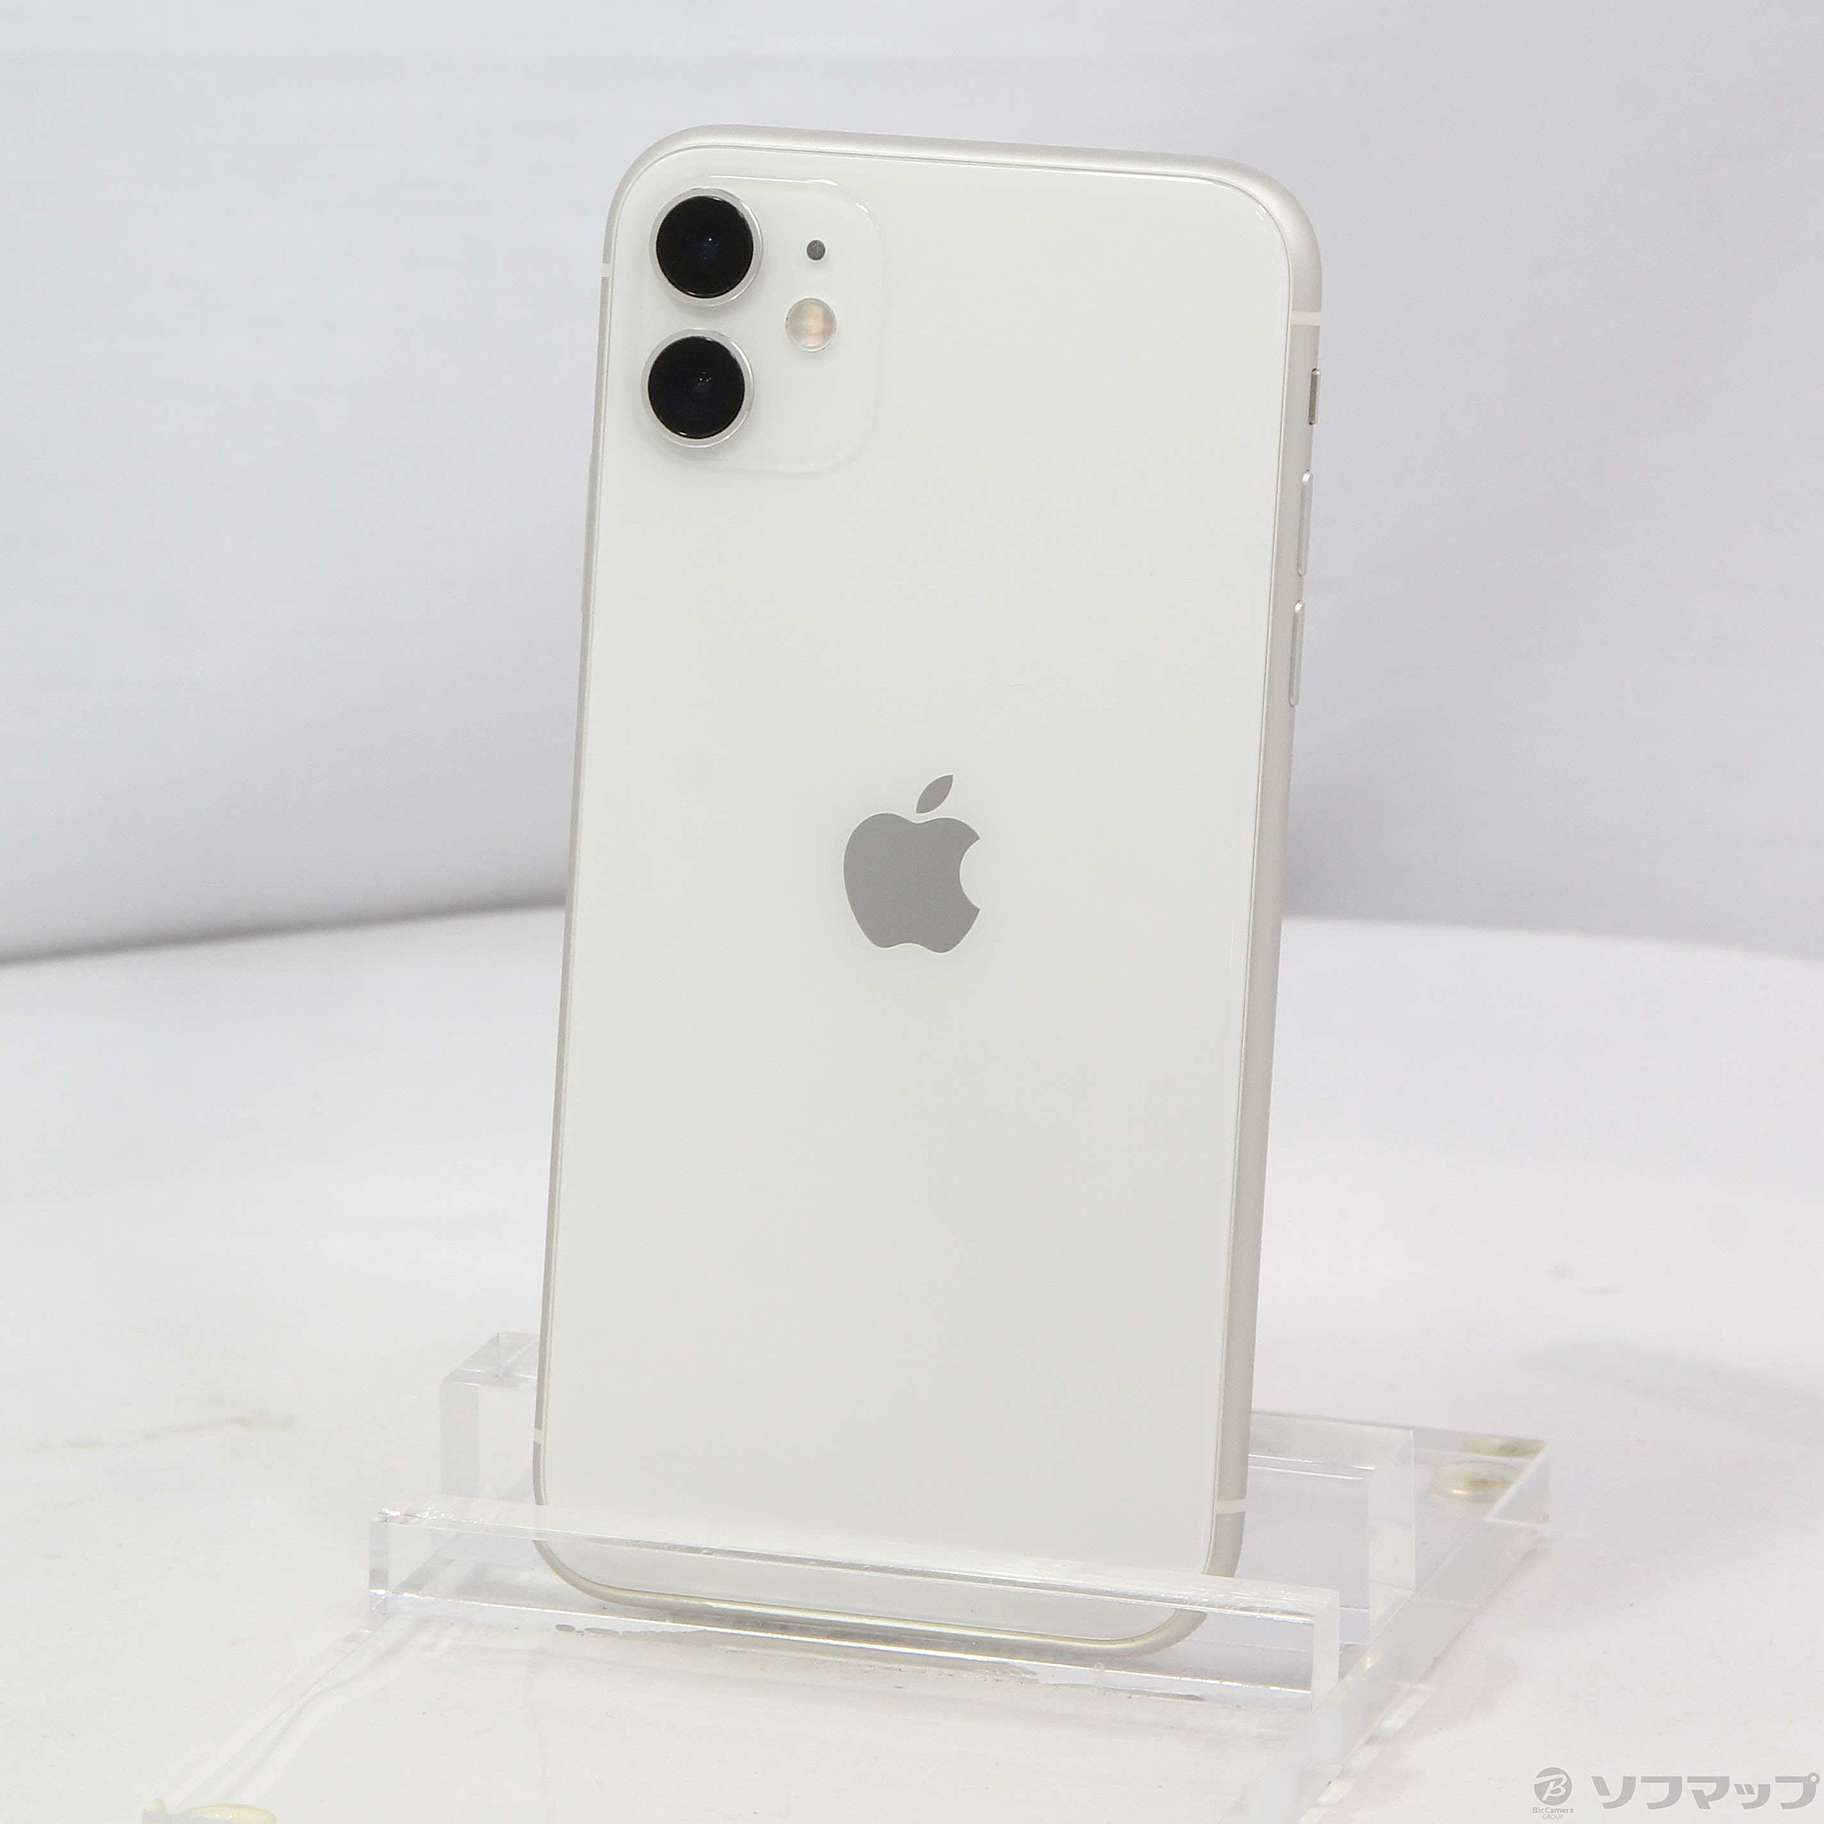 iPhone 11 ホワイト 128 GB Softbank付属品なし - スマートフォン本体